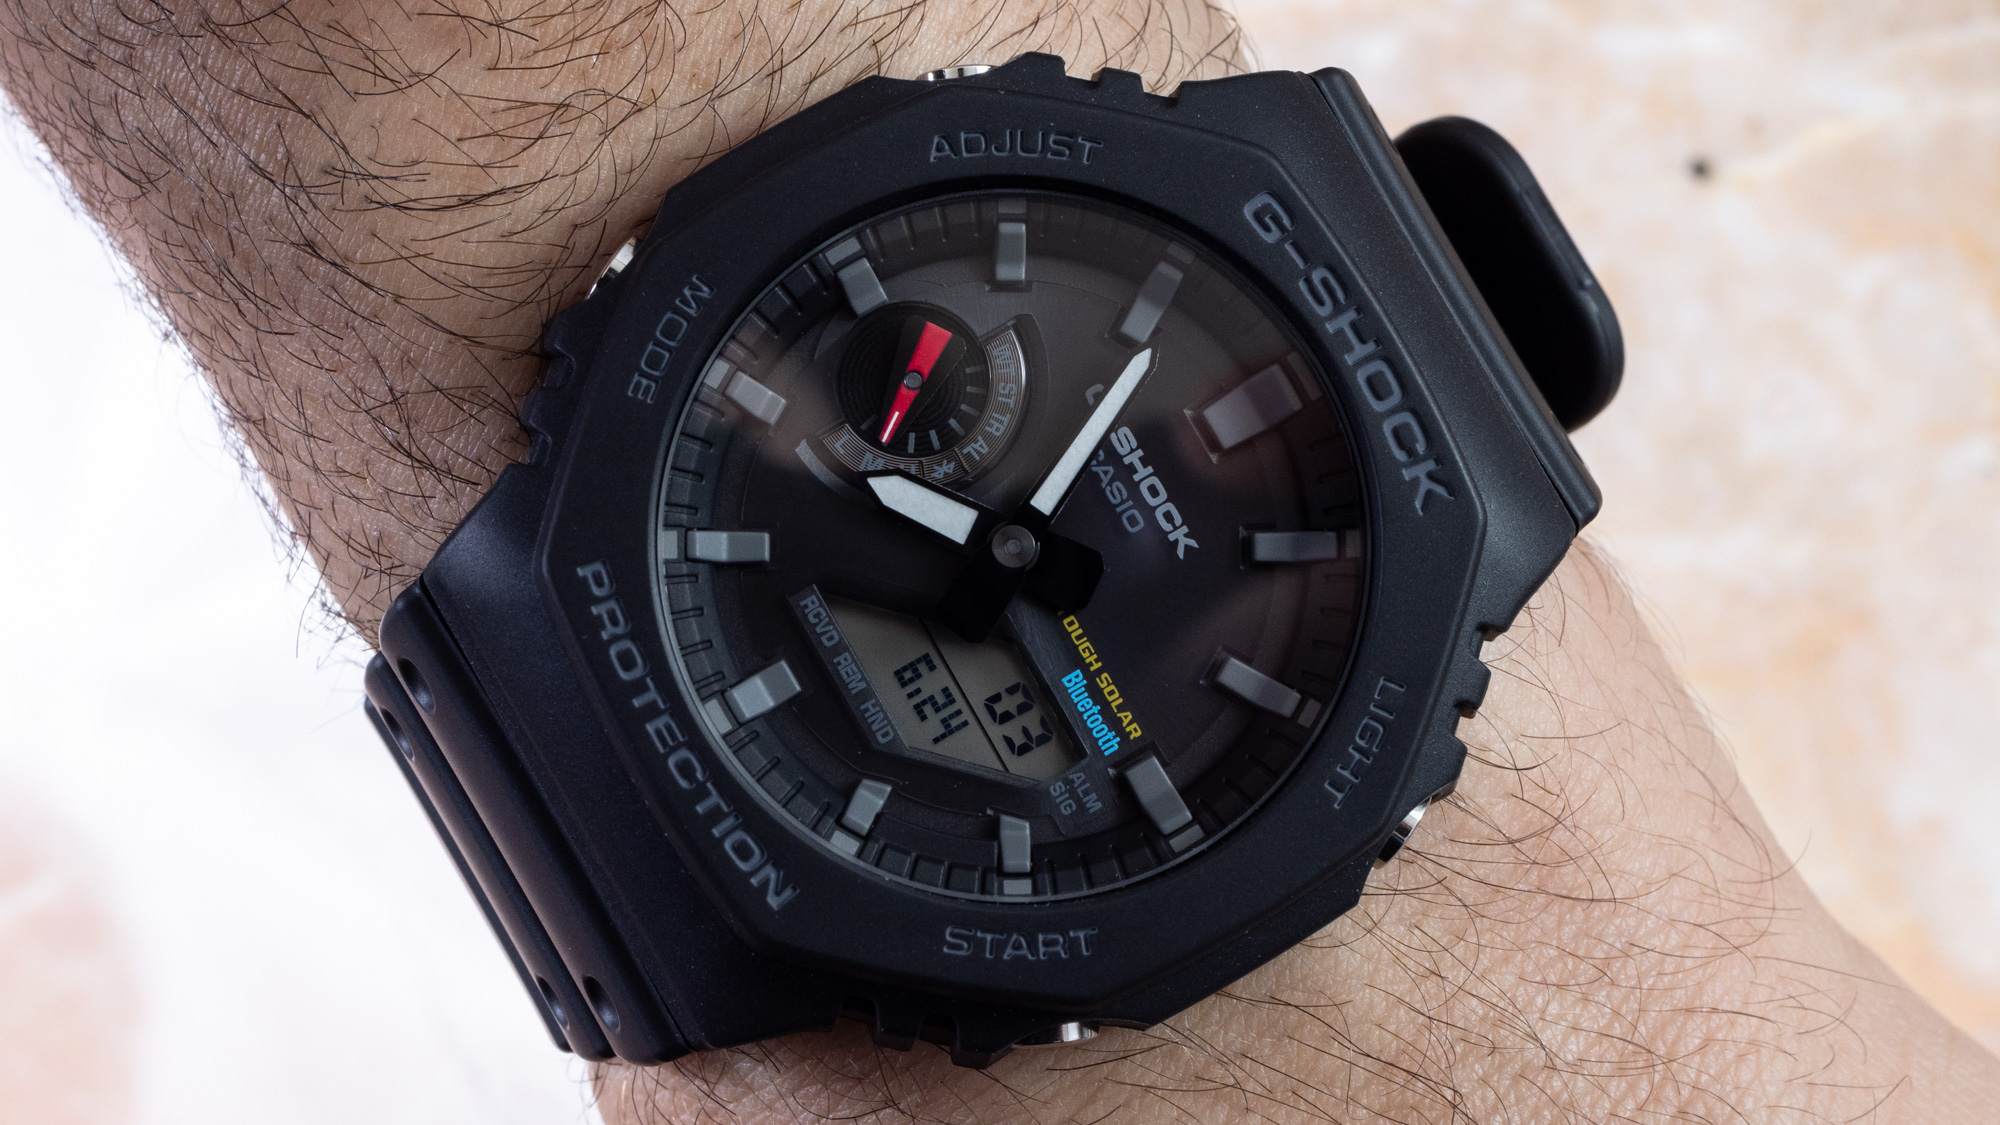 G-Shock CasiOak] Review  Casio g shock watches, Watches for men